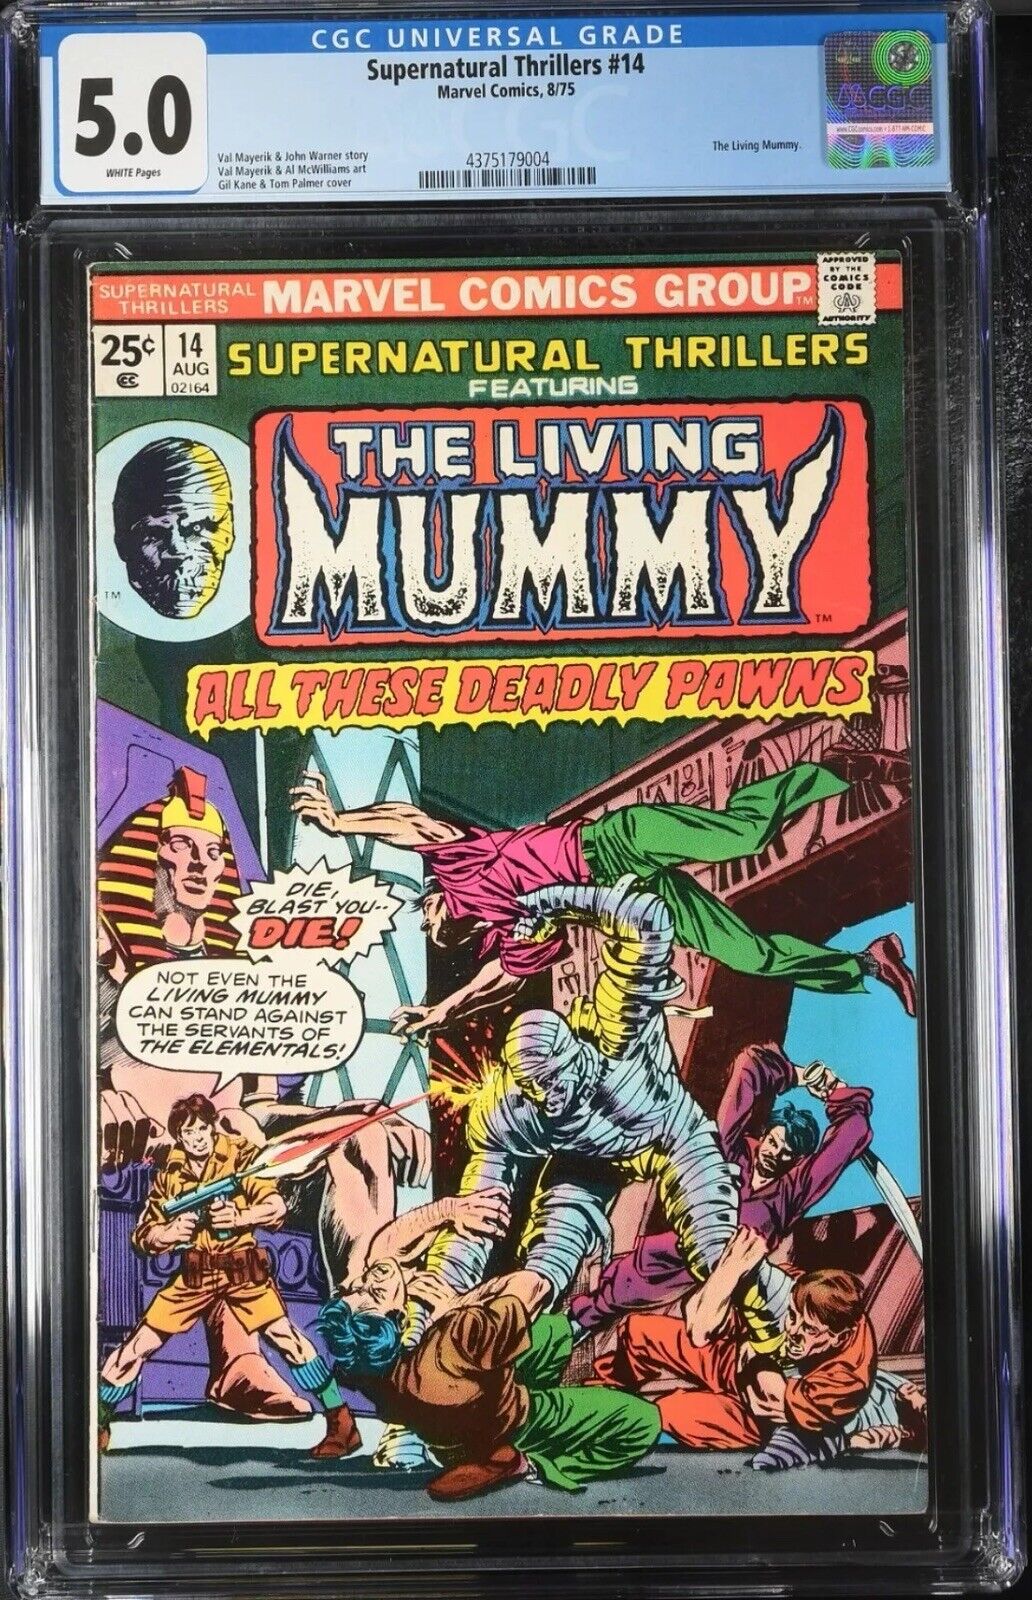 Supernatural Thrillers #14 1975 CGC 5.0 wp - The Living Mummy.